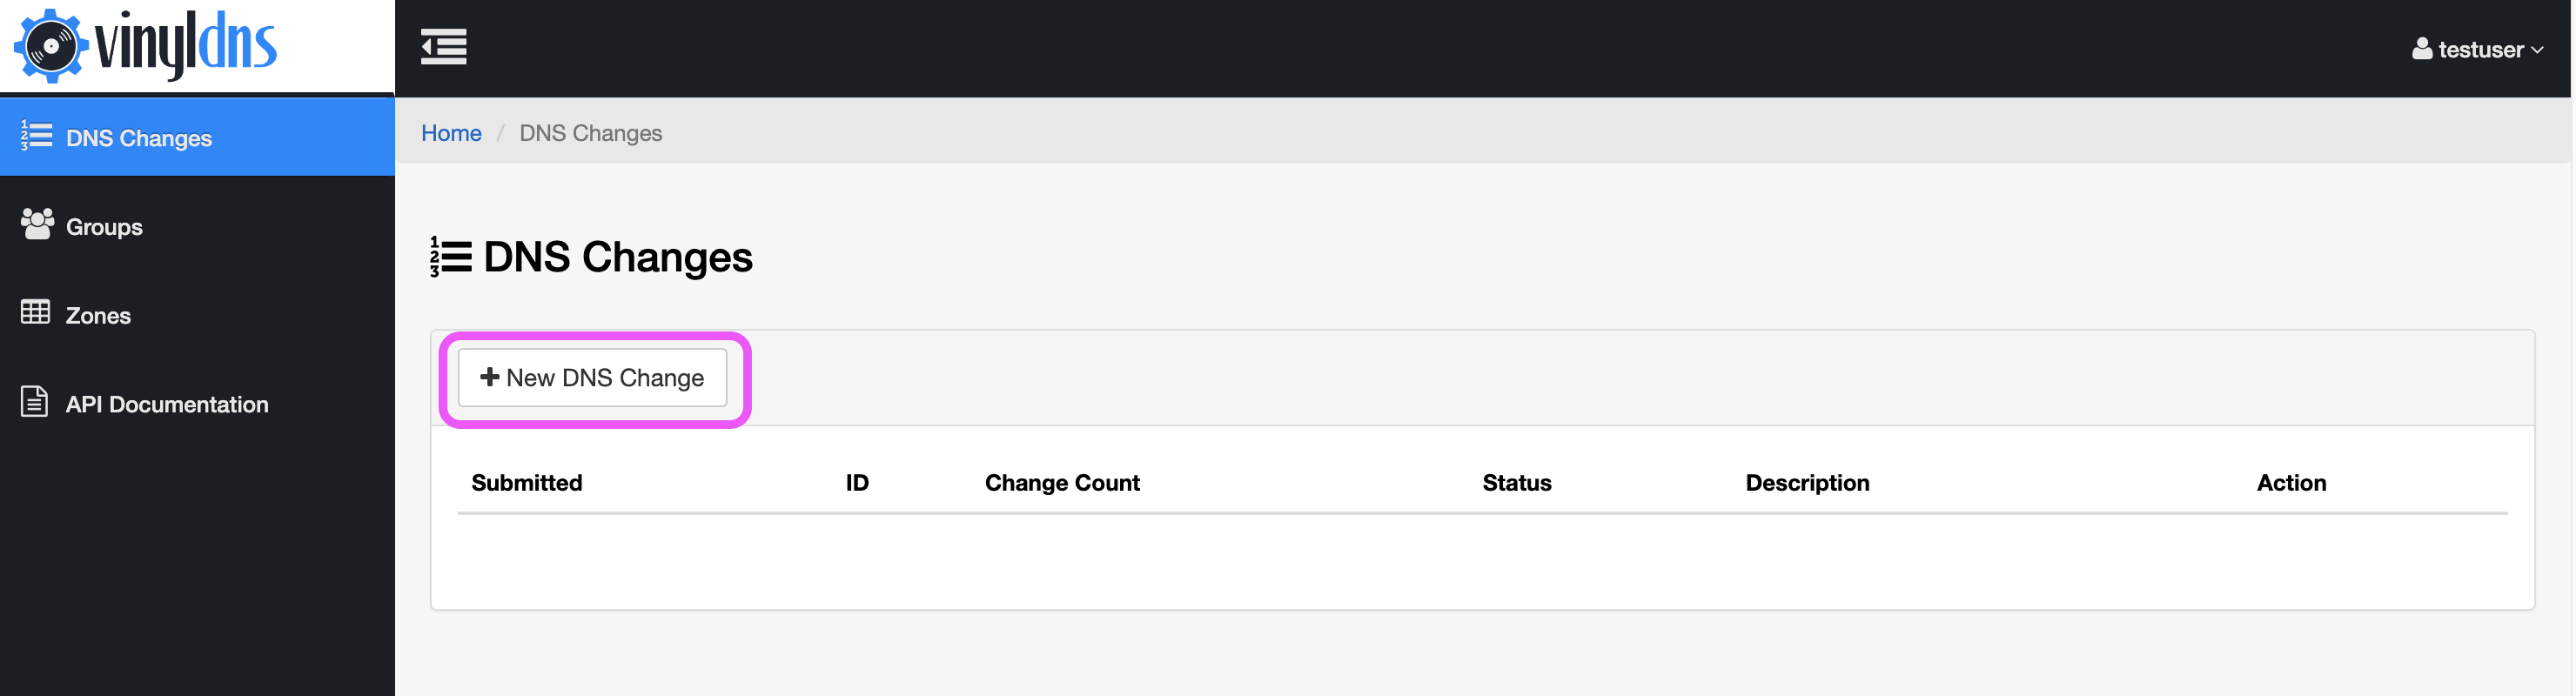 DNS Changes main page screenshot